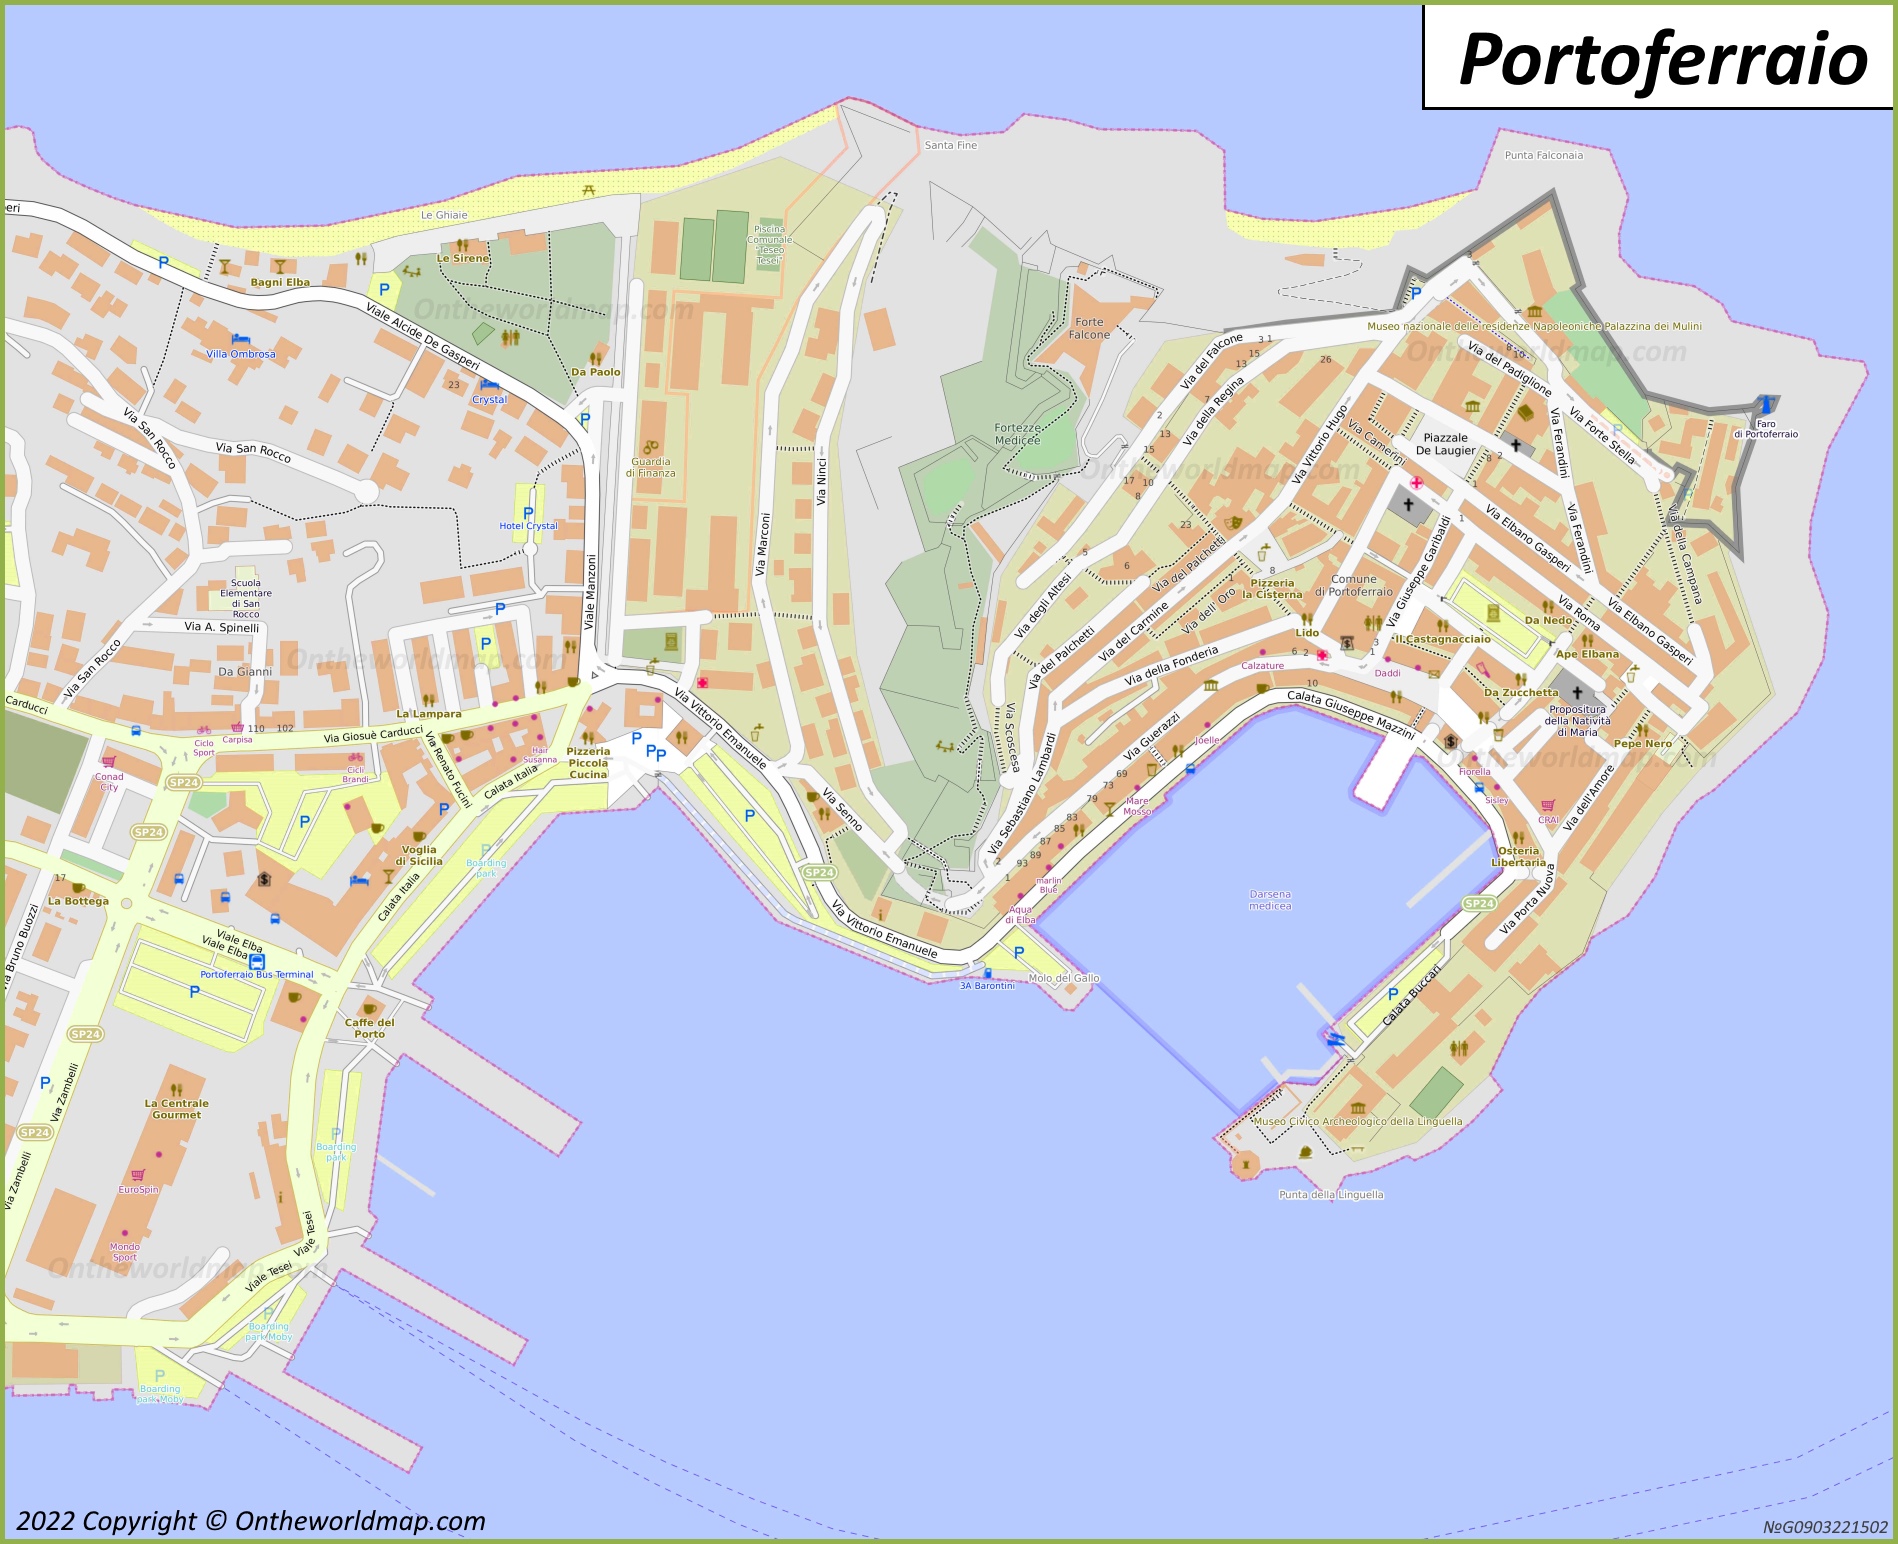 Portoferraio Town Centre Map